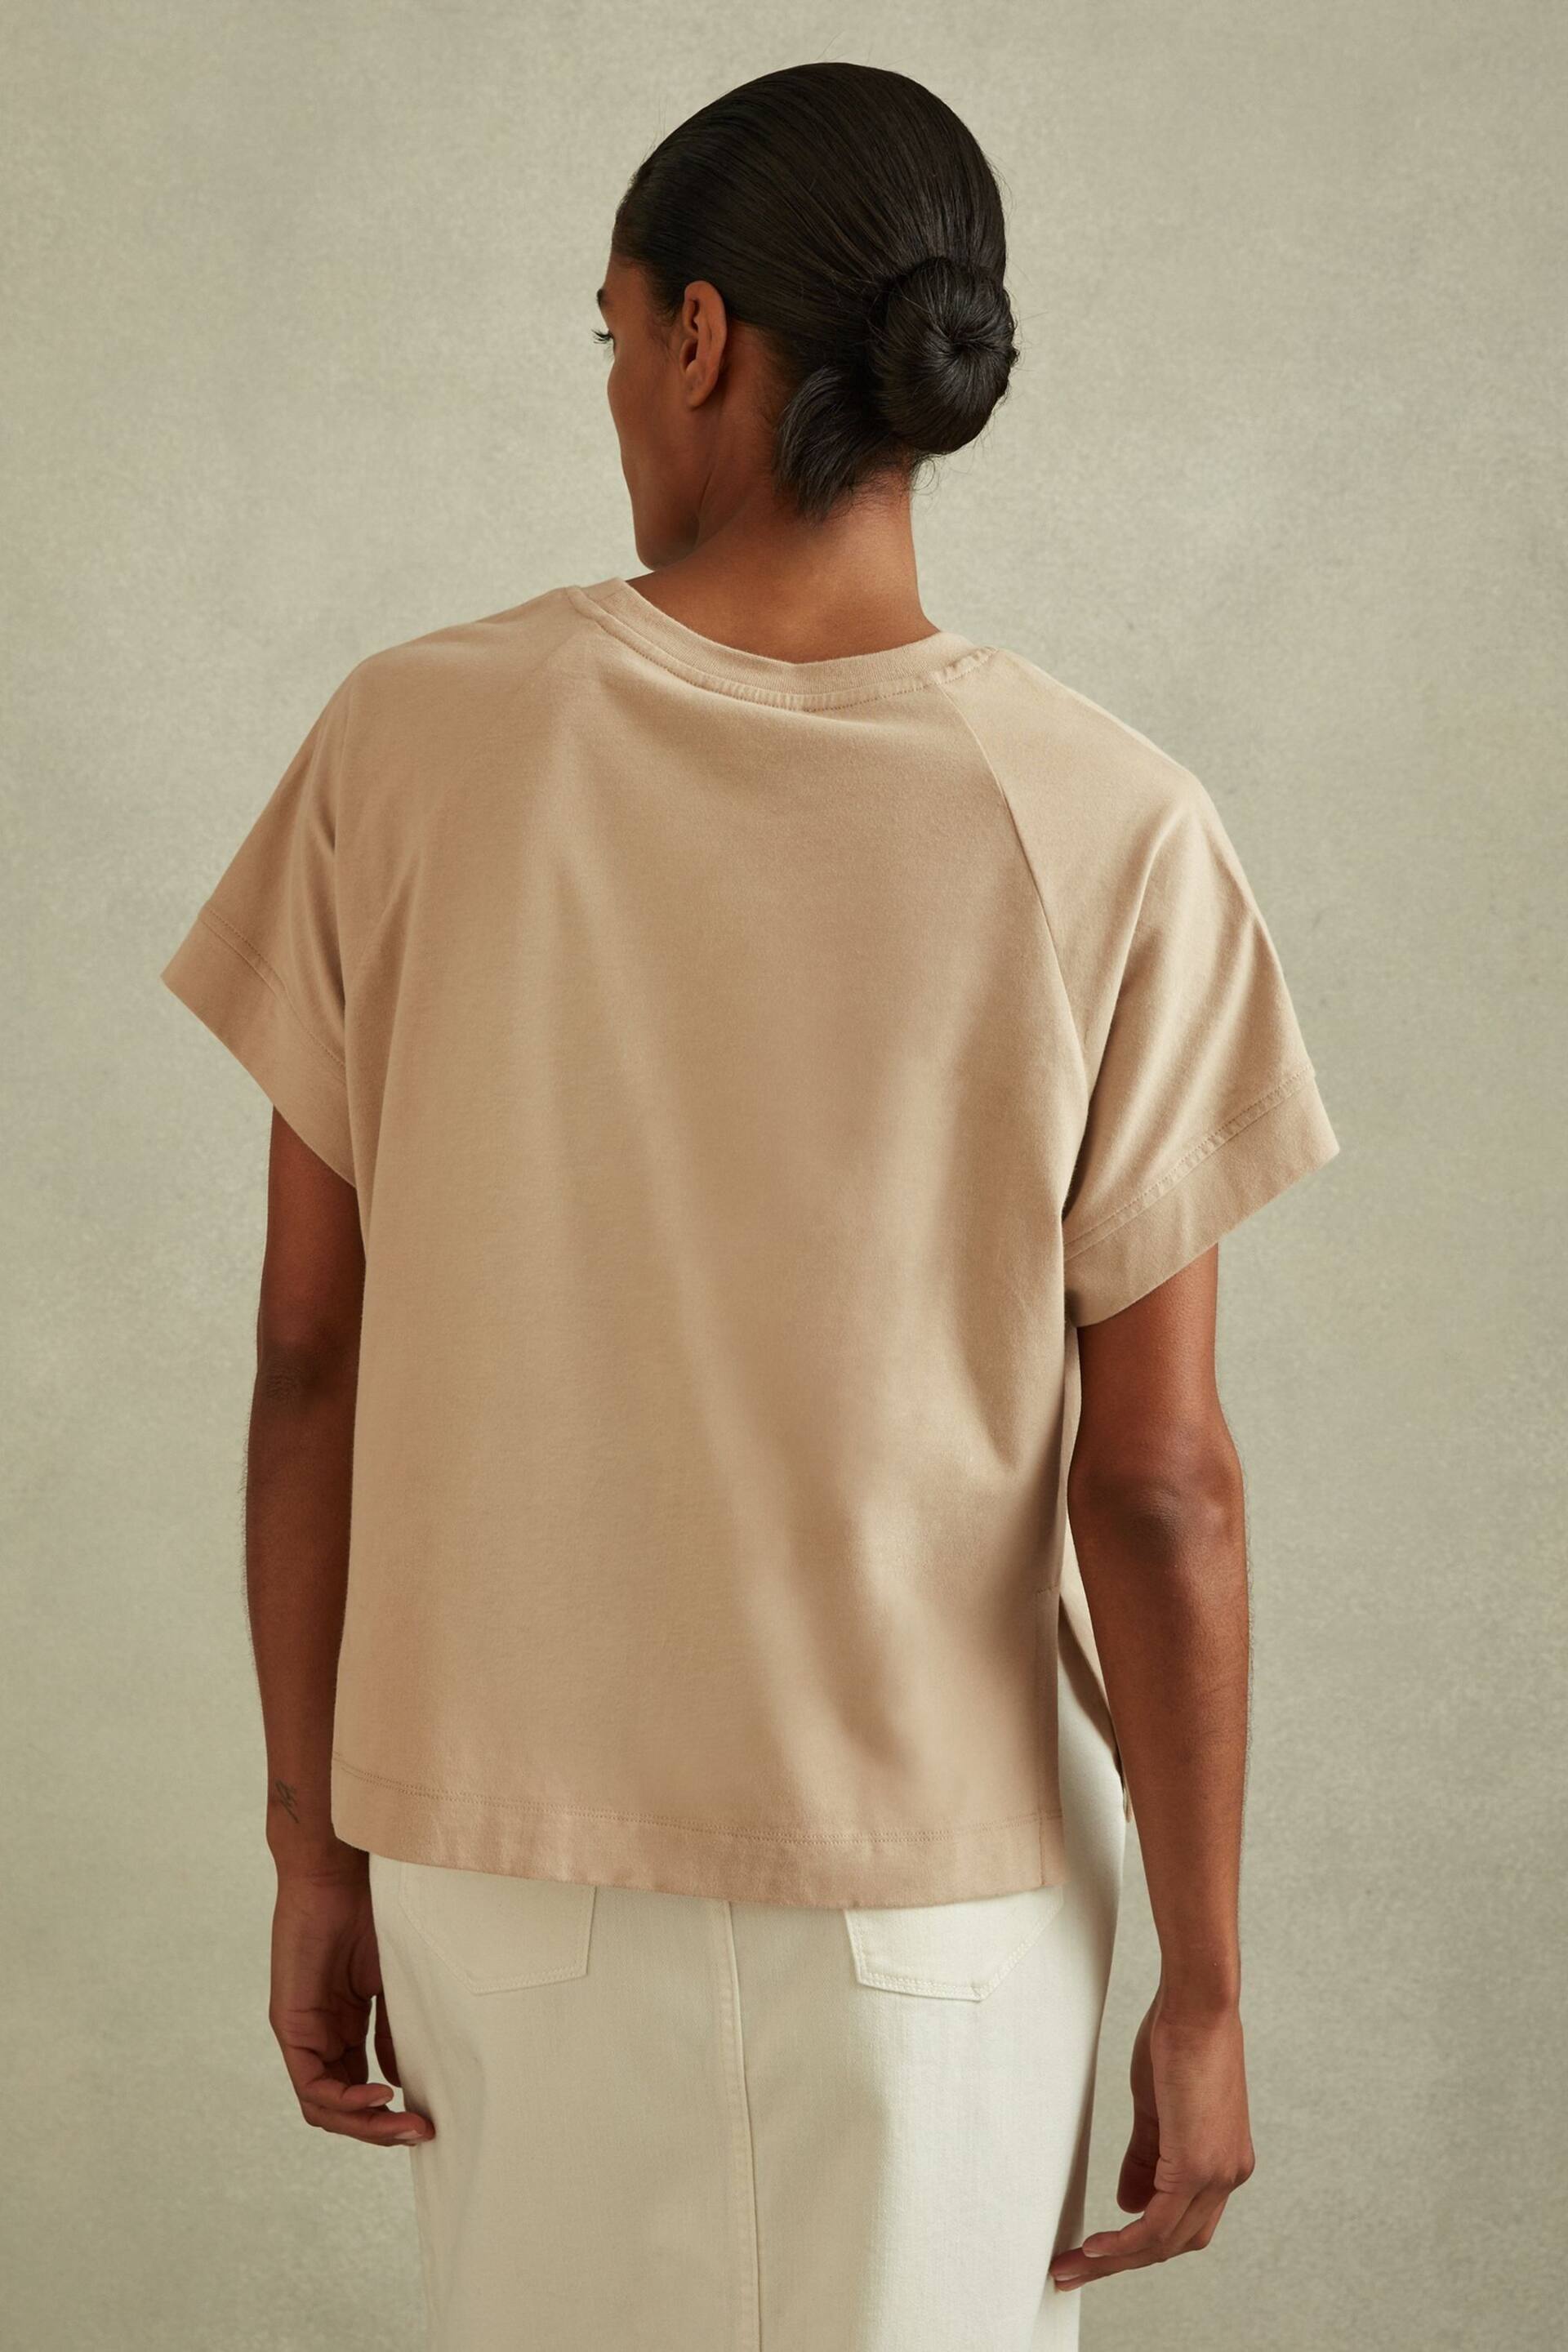 Reiss Neutral Lois Cotton Crew Neck T-Shirt - Image 4 of 5